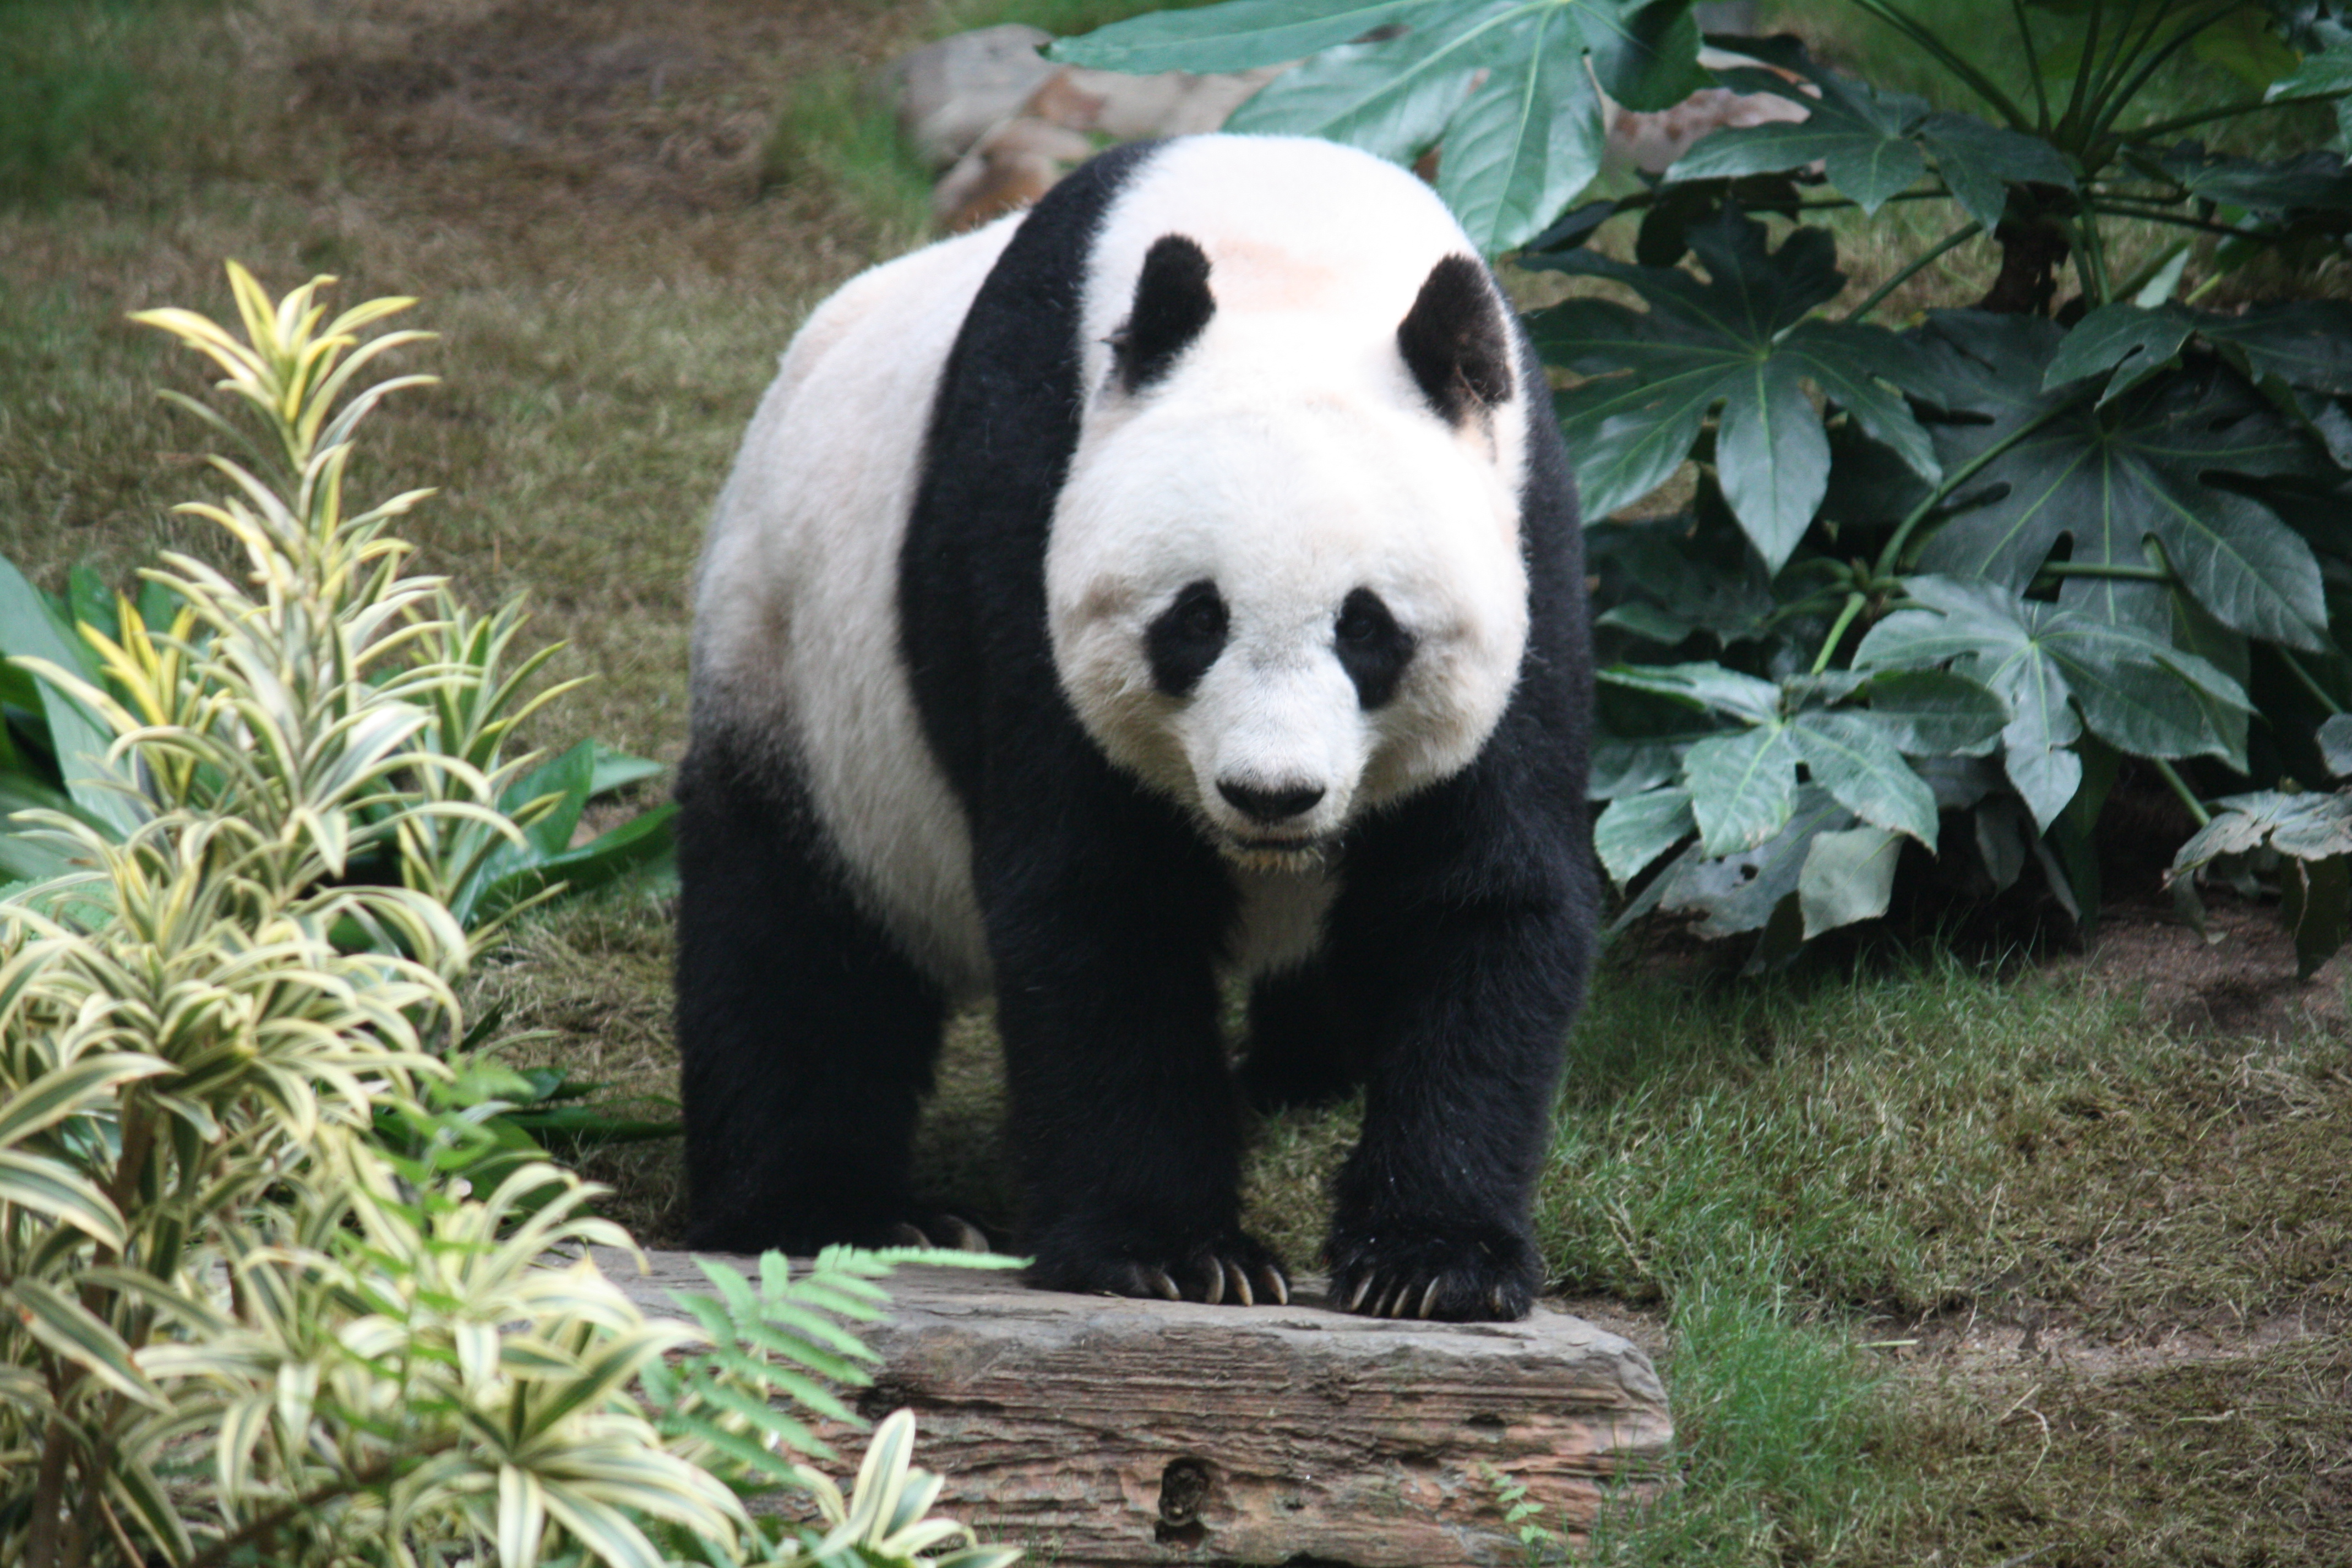 Saving the giant panda bear